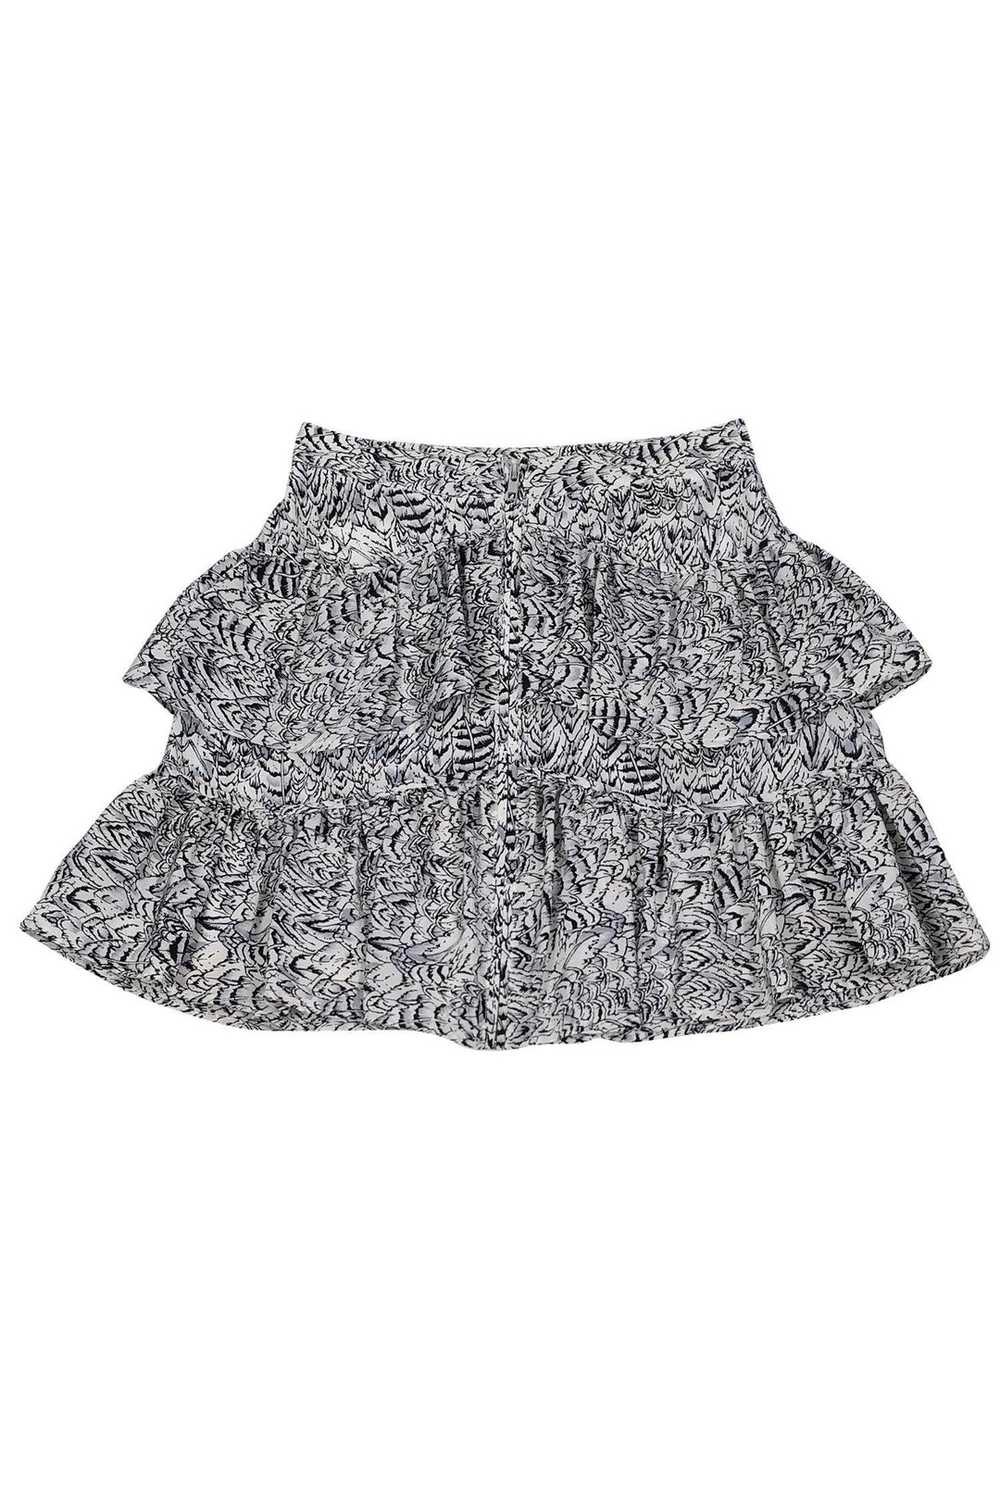 Reiss - White, Grey & Black Ruffle Skirt Sz 2 - image 1